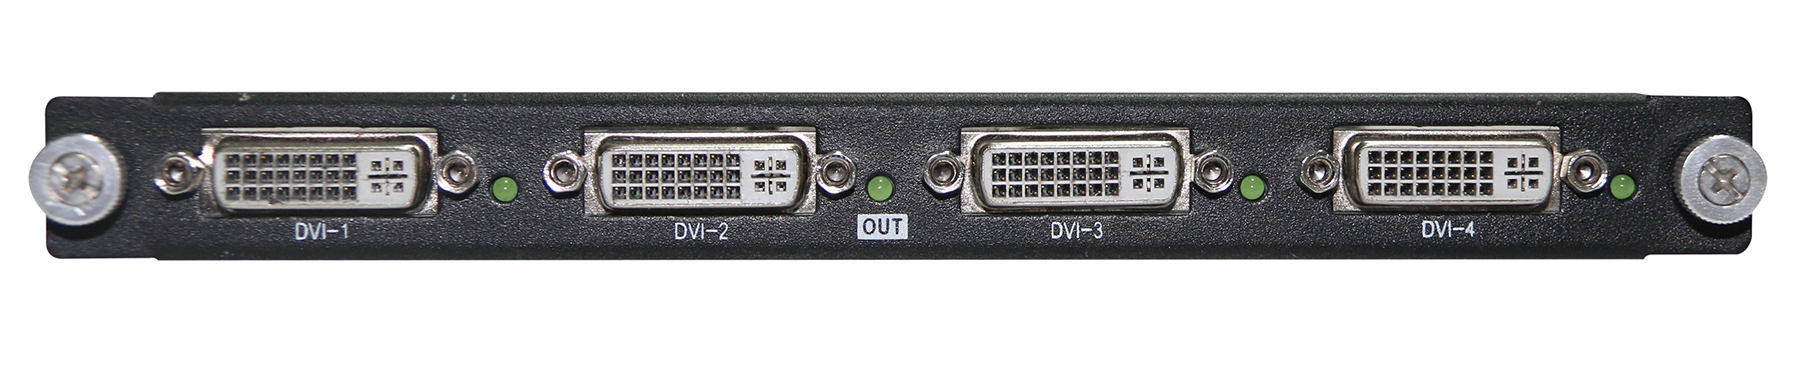 OC2-Q-DVI